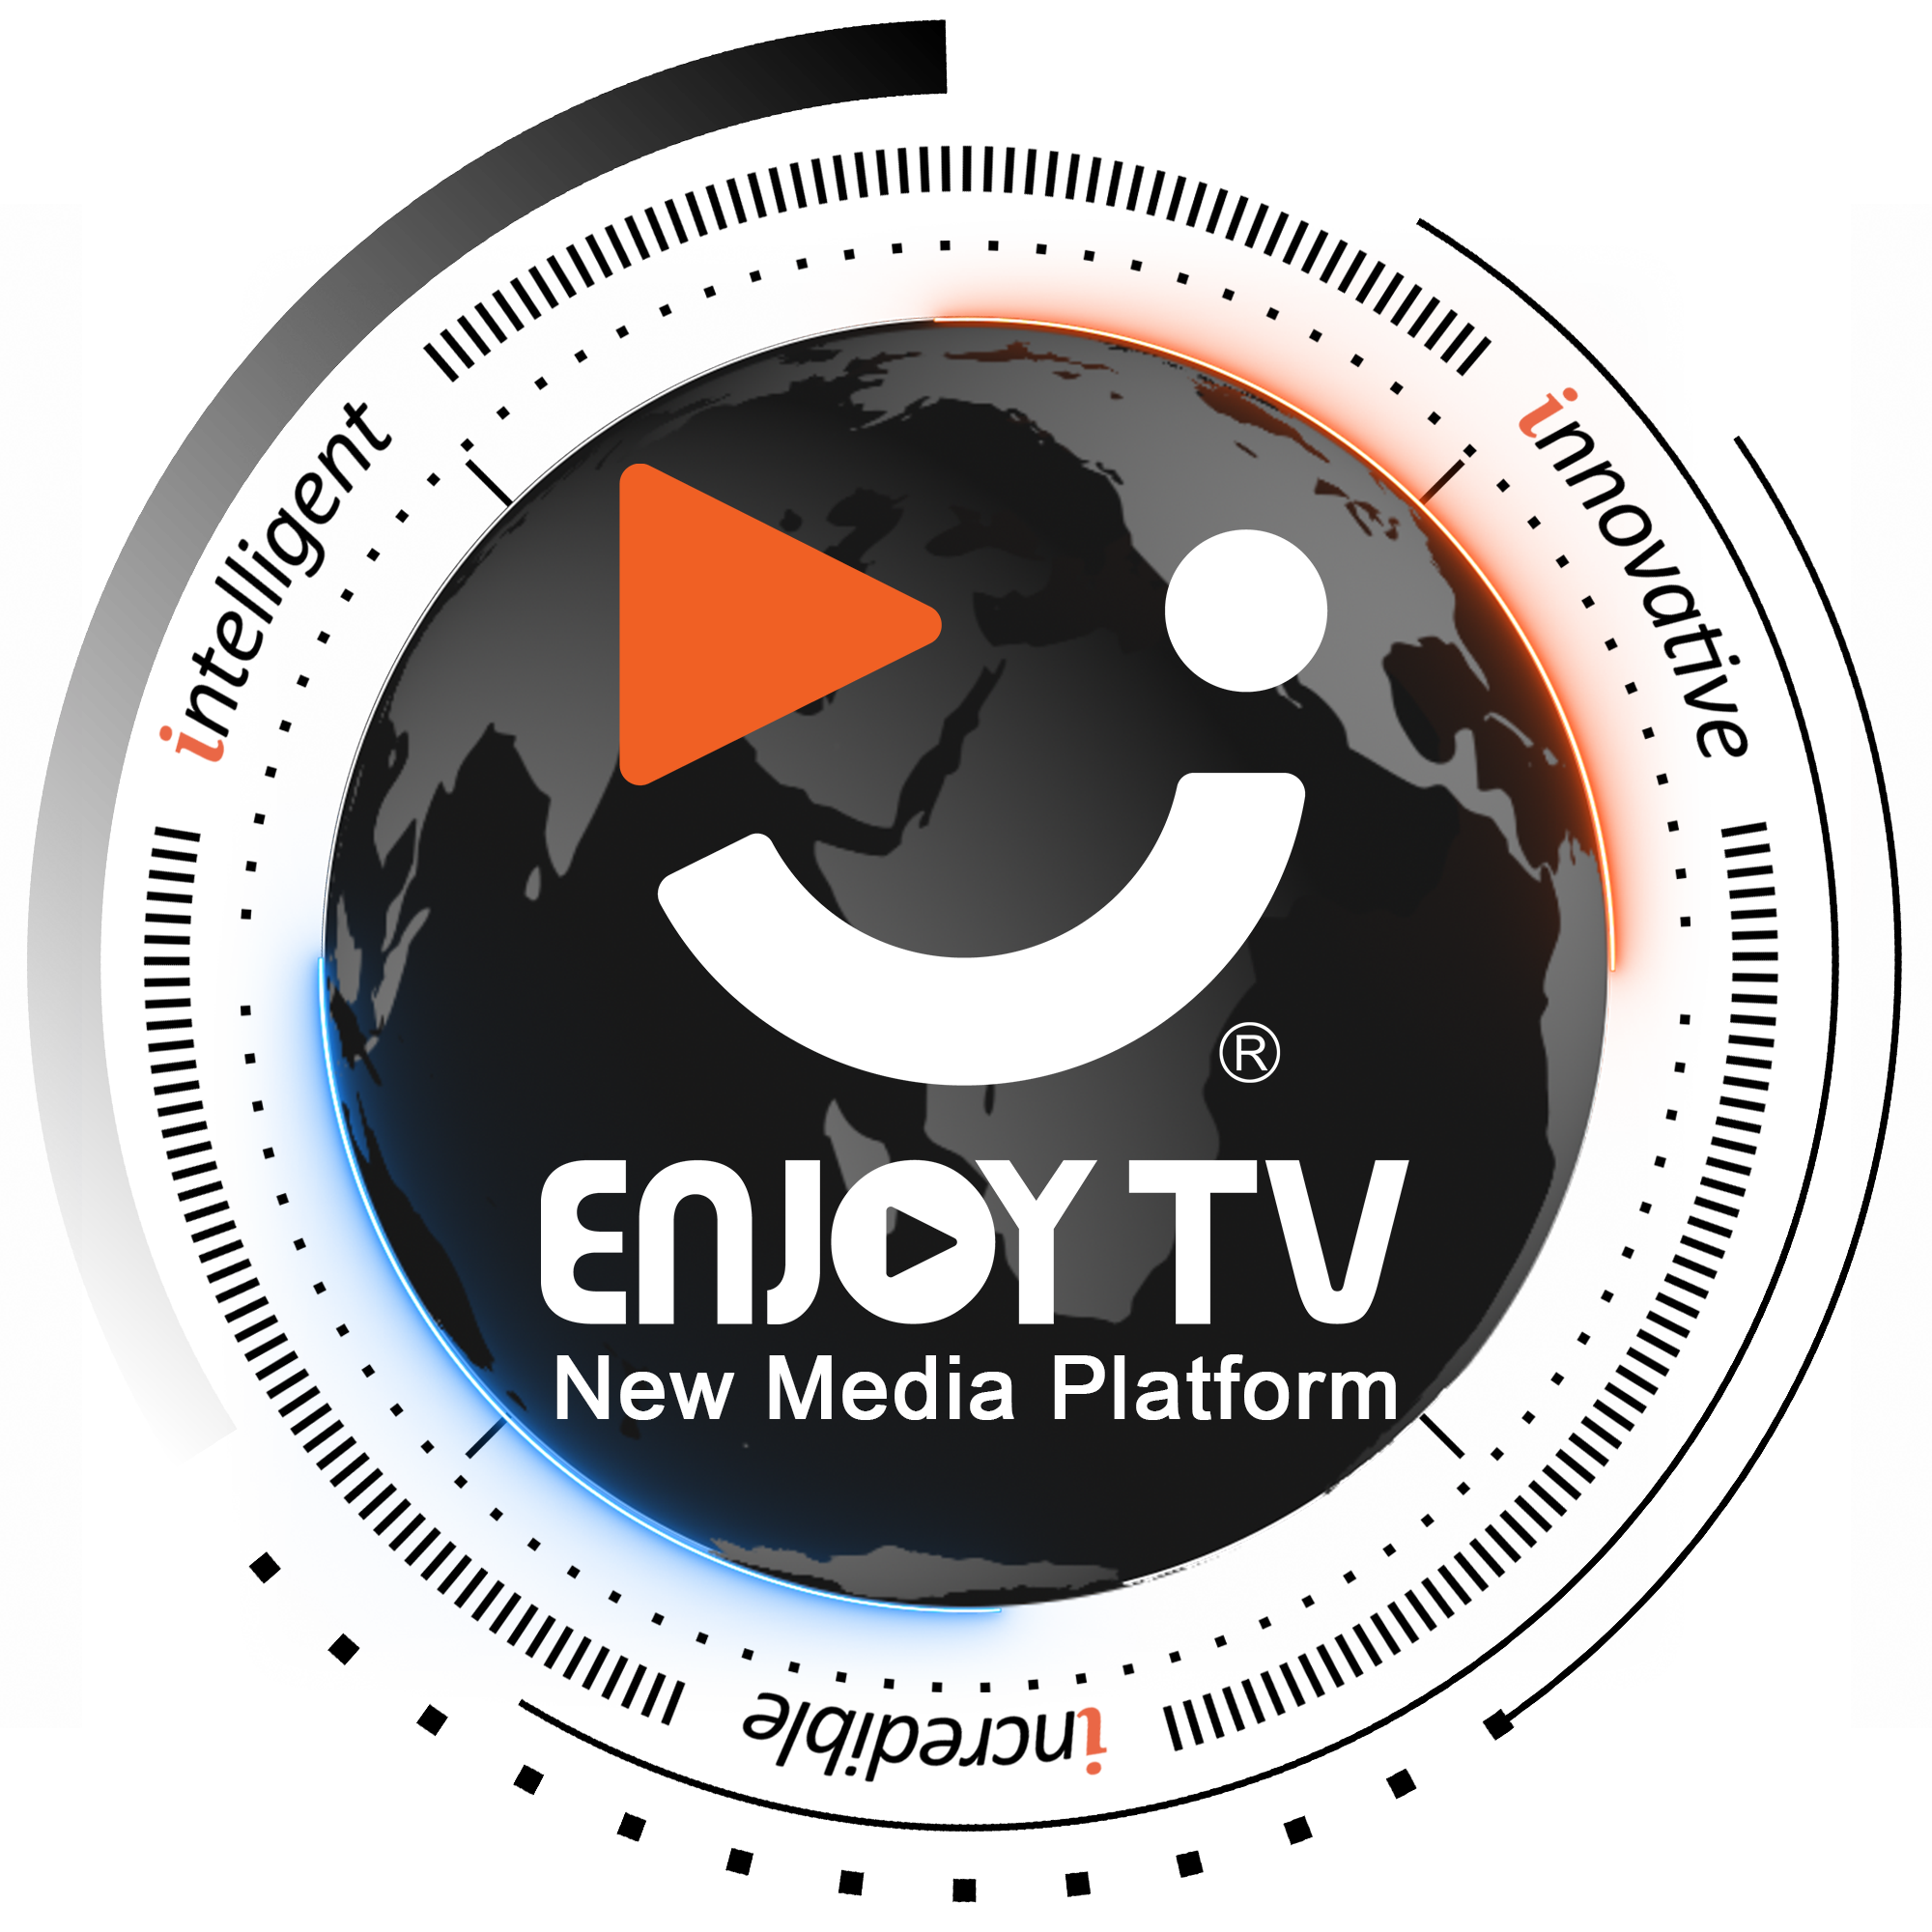 Enjoy TV New Media Platform